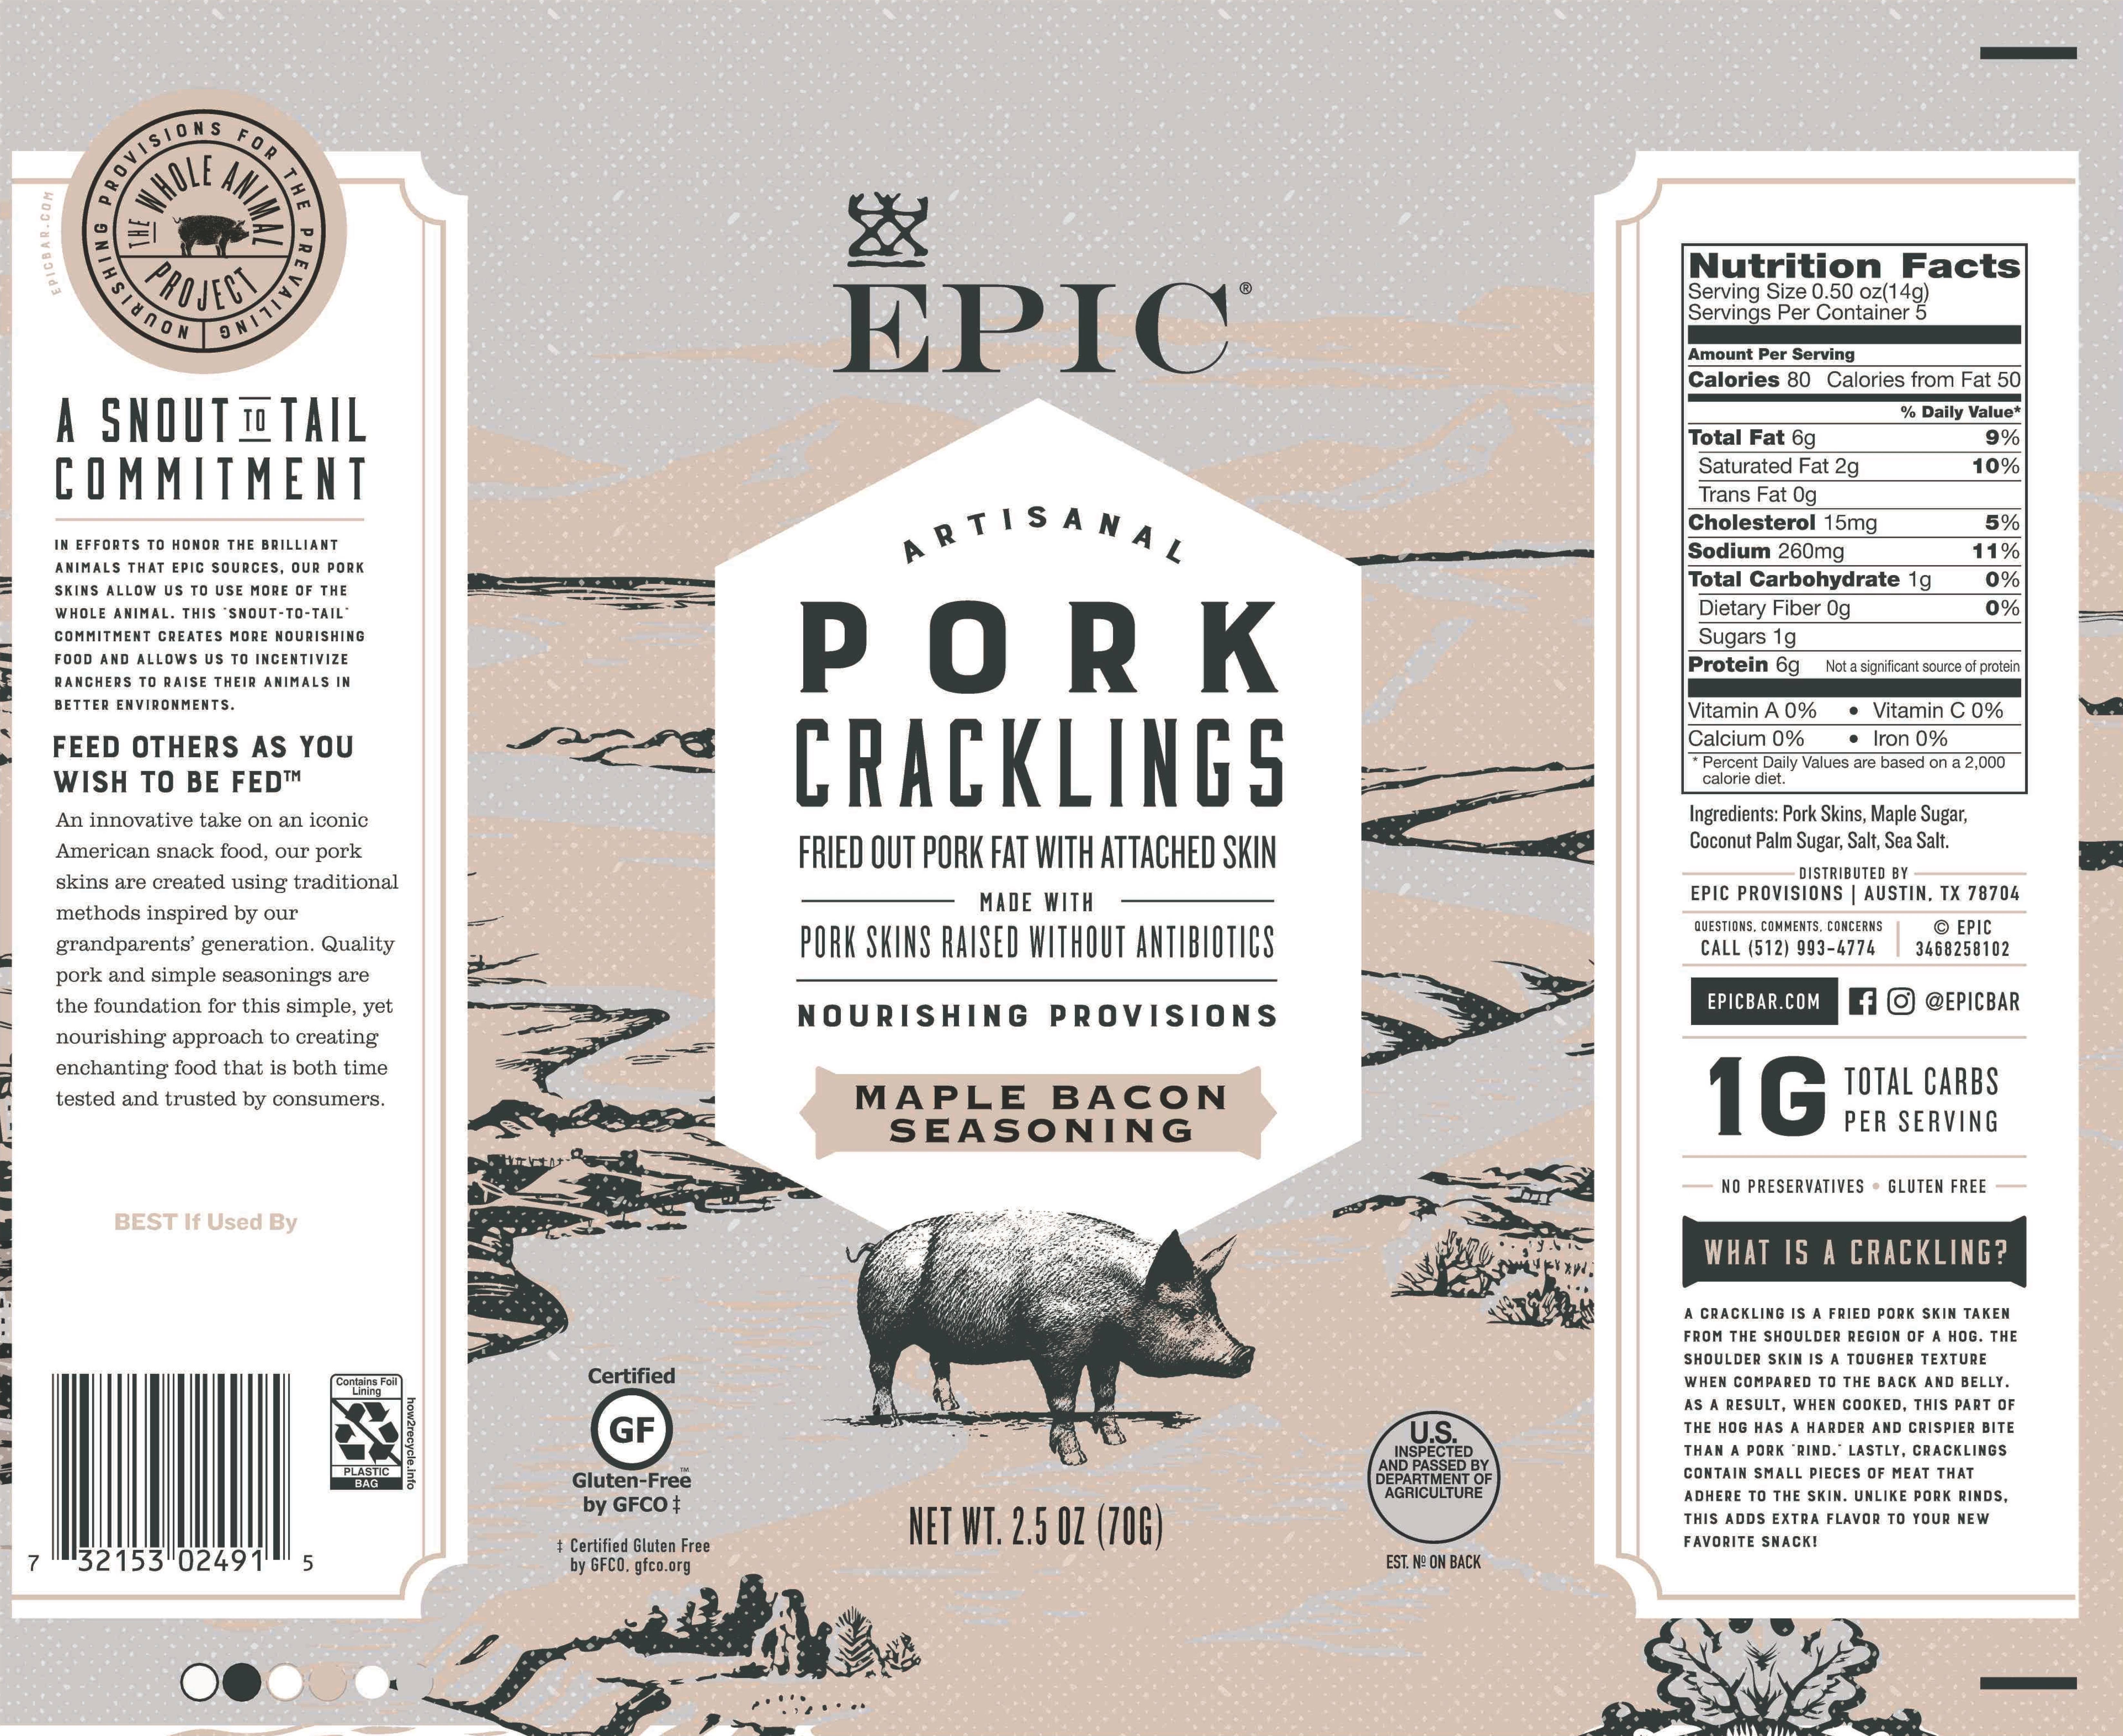 Epic Pork Crackling - Maple Bacon Seasoning, 2.5oz